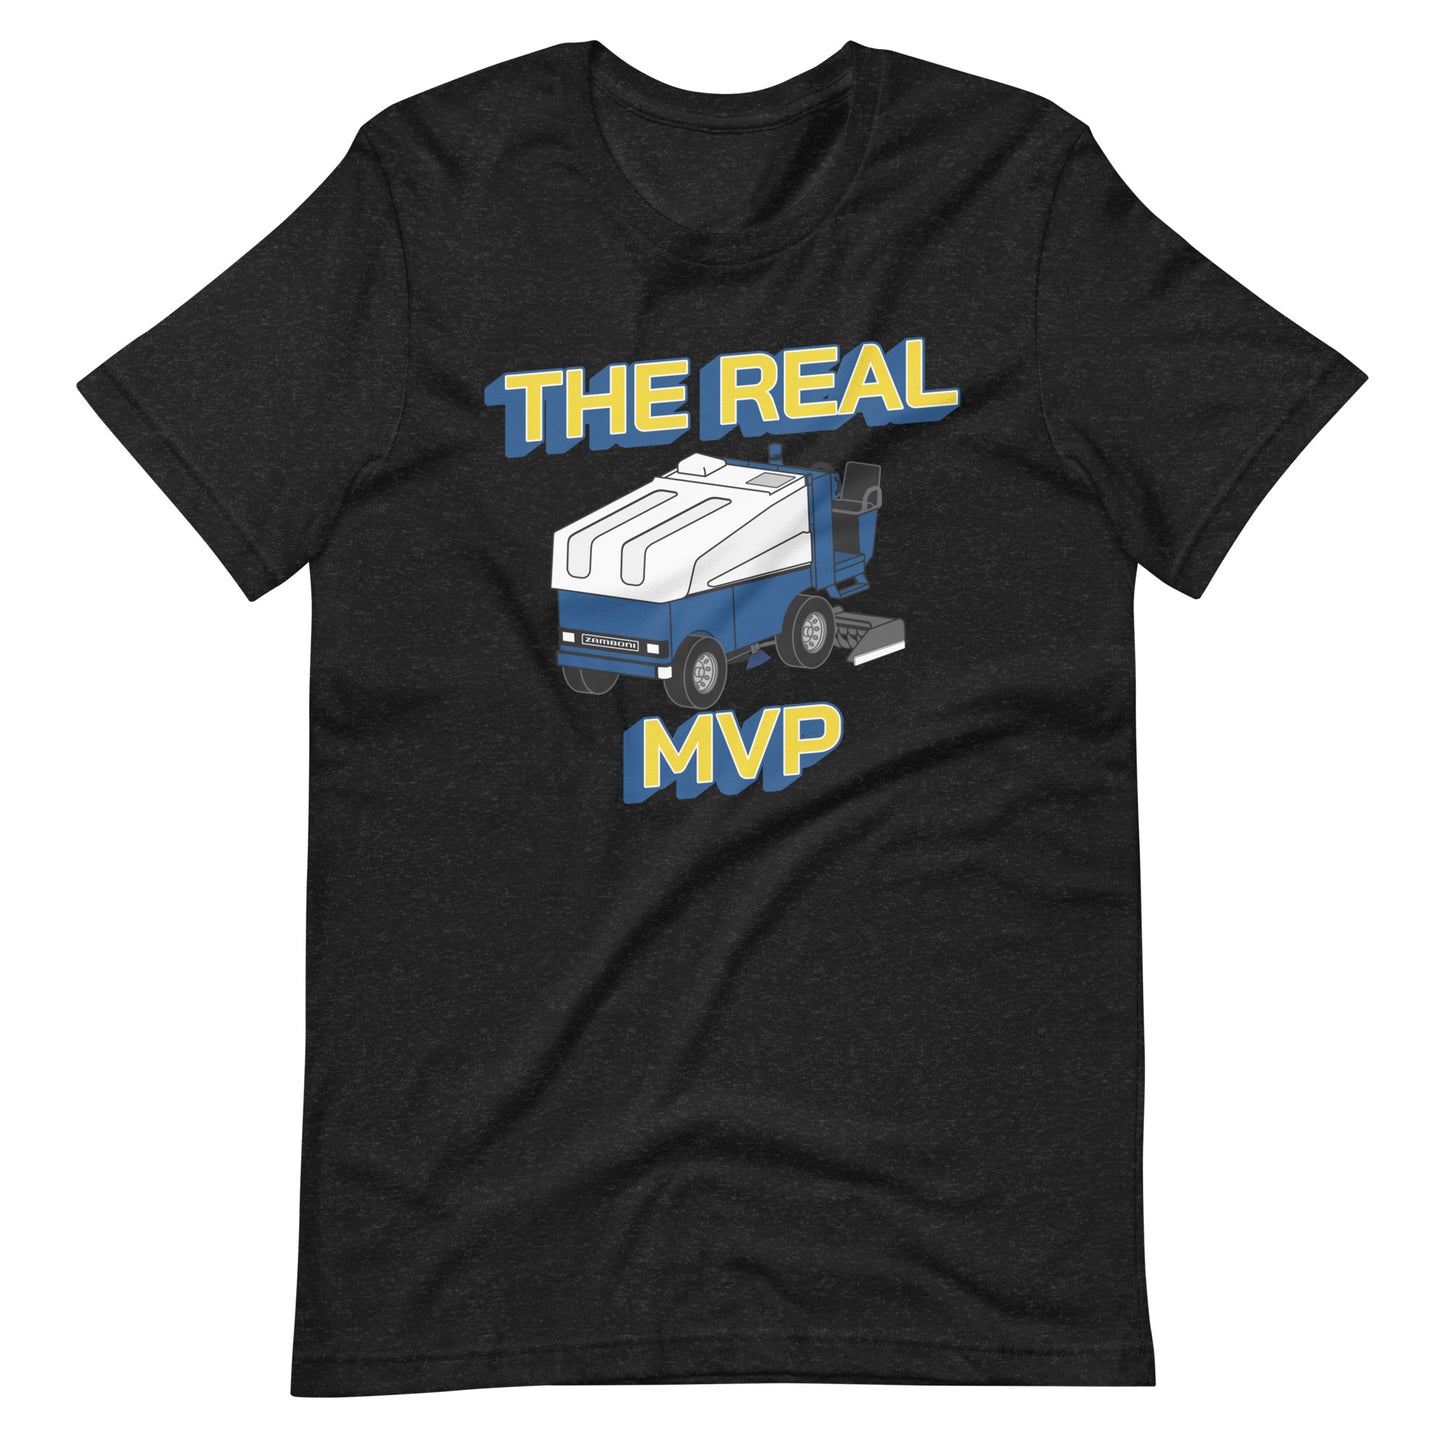 The Real MVP Tee